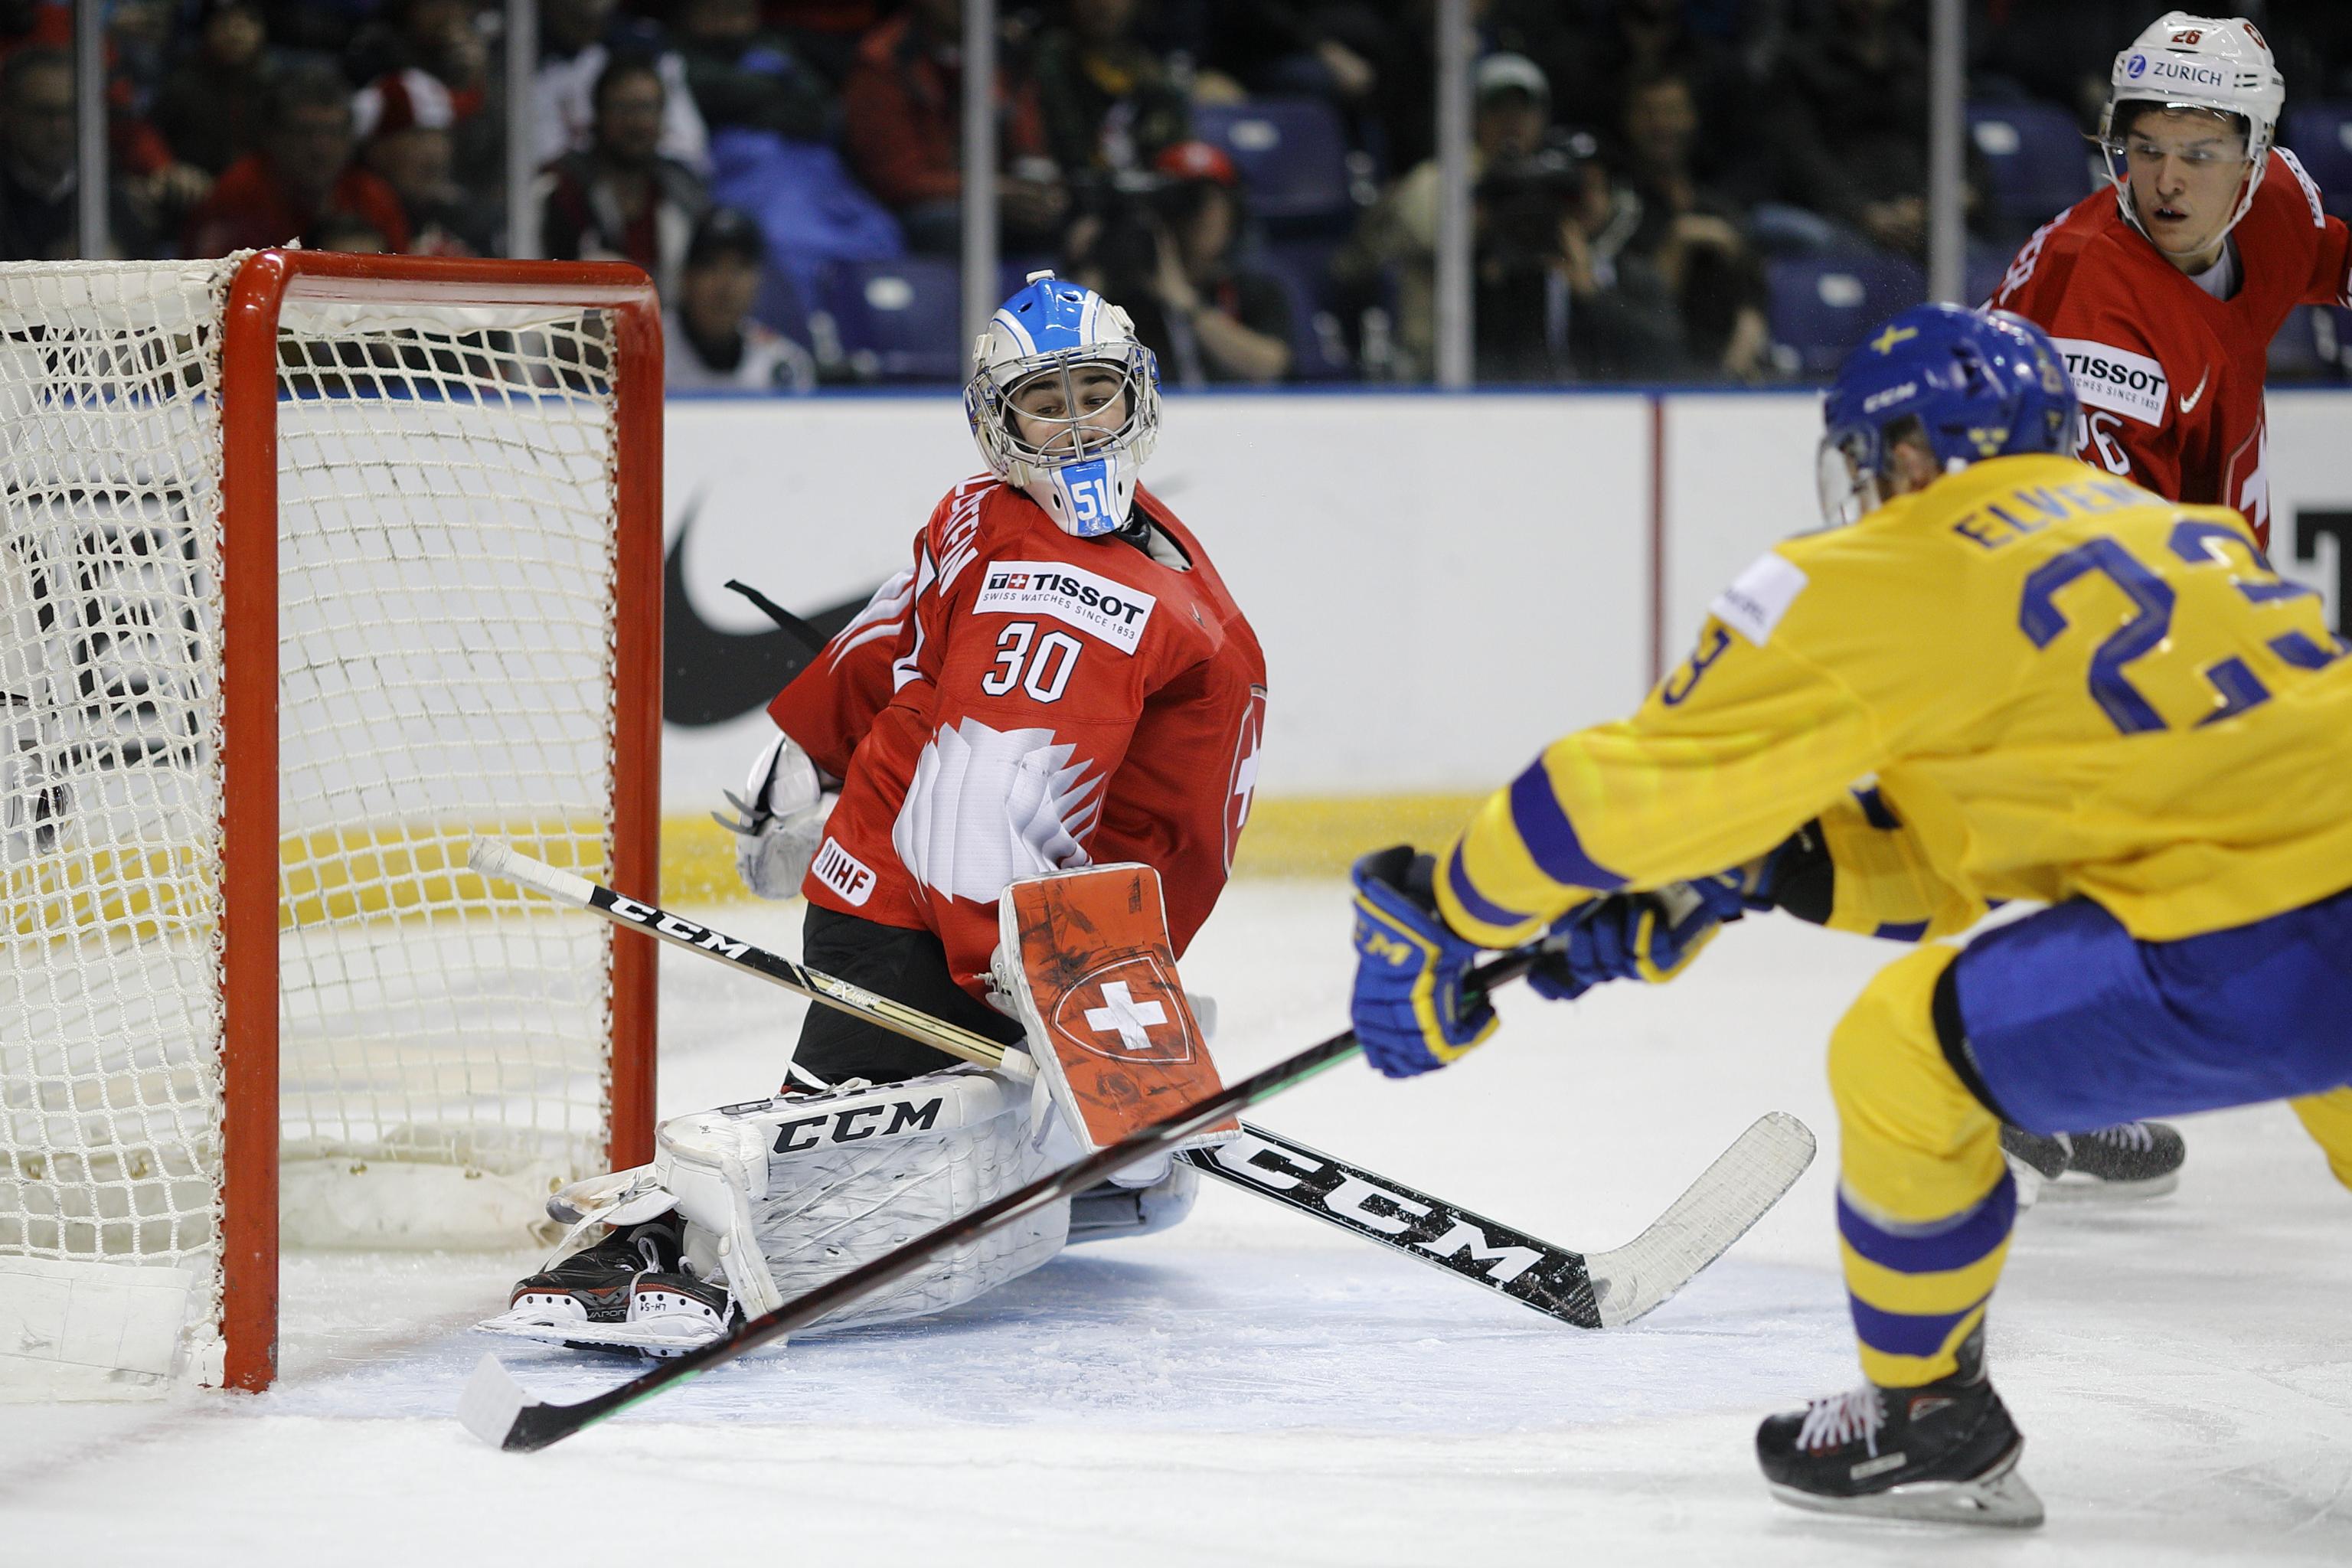 US upsets Canada 2-0 to win world junior hockey championship